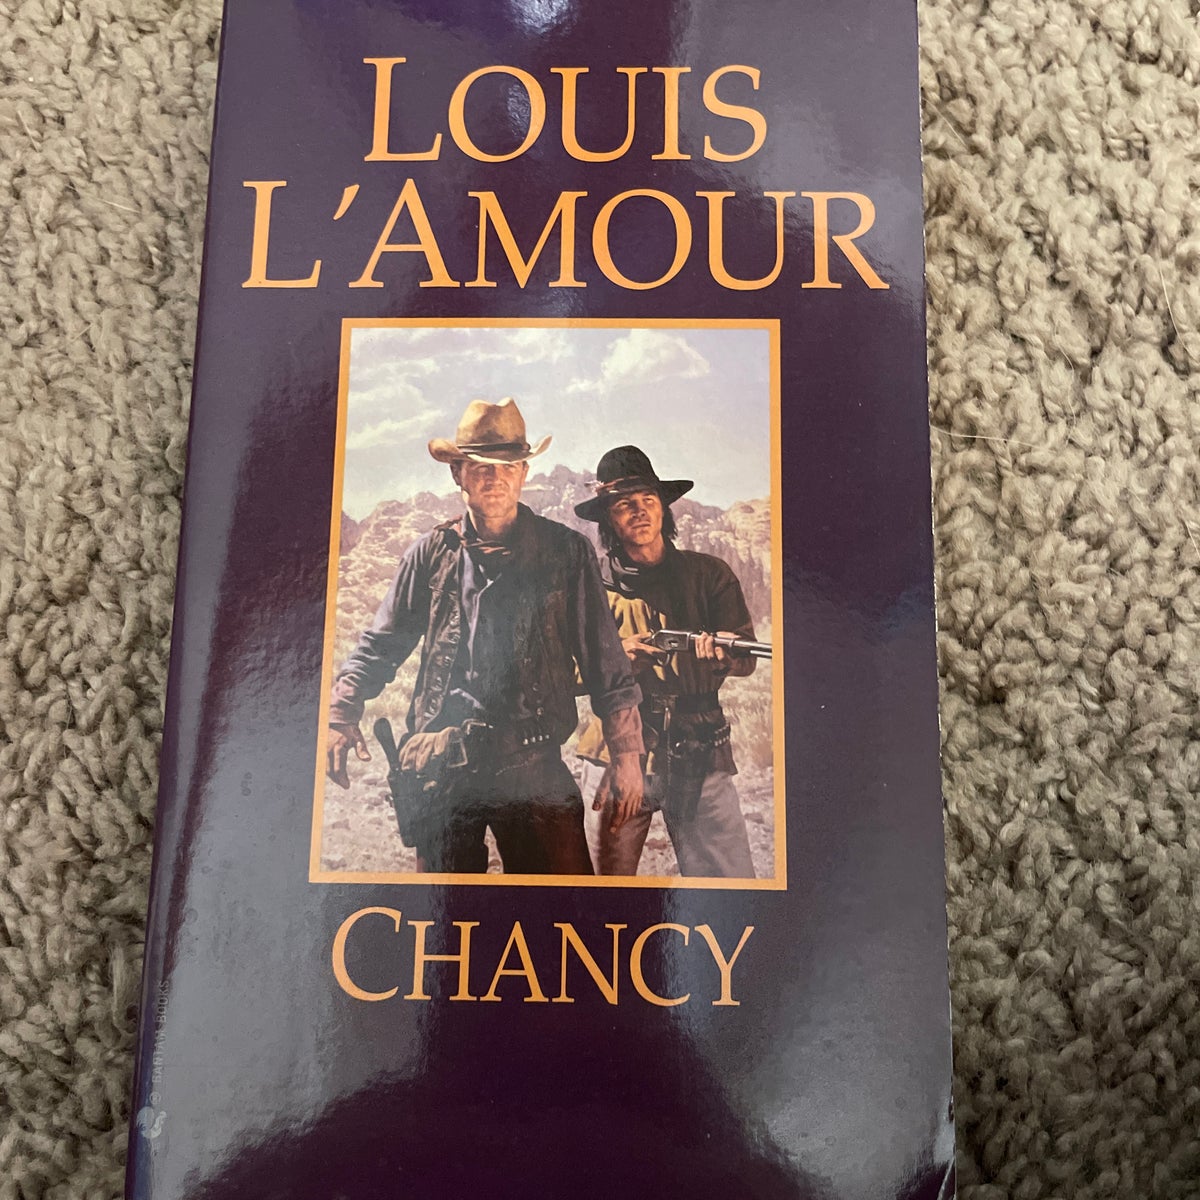 Chancy - a novel by Louis L'Amour